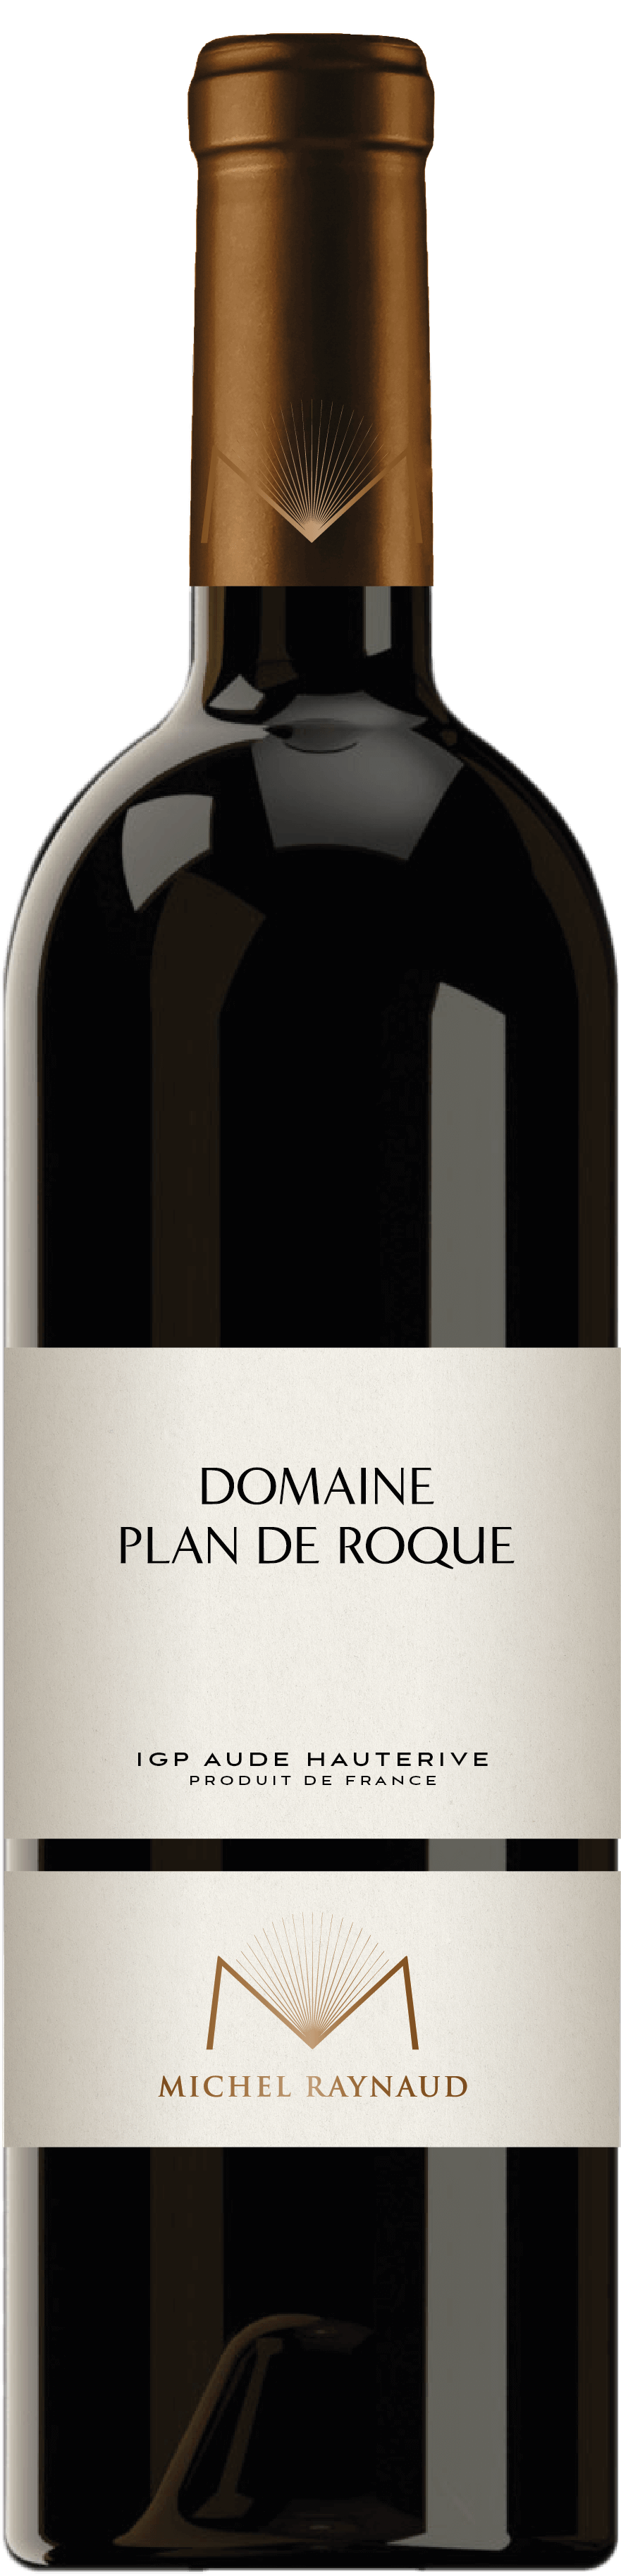 Domaine Plan de Roque – Aude Hauterive White Wine - Michel Raynaud